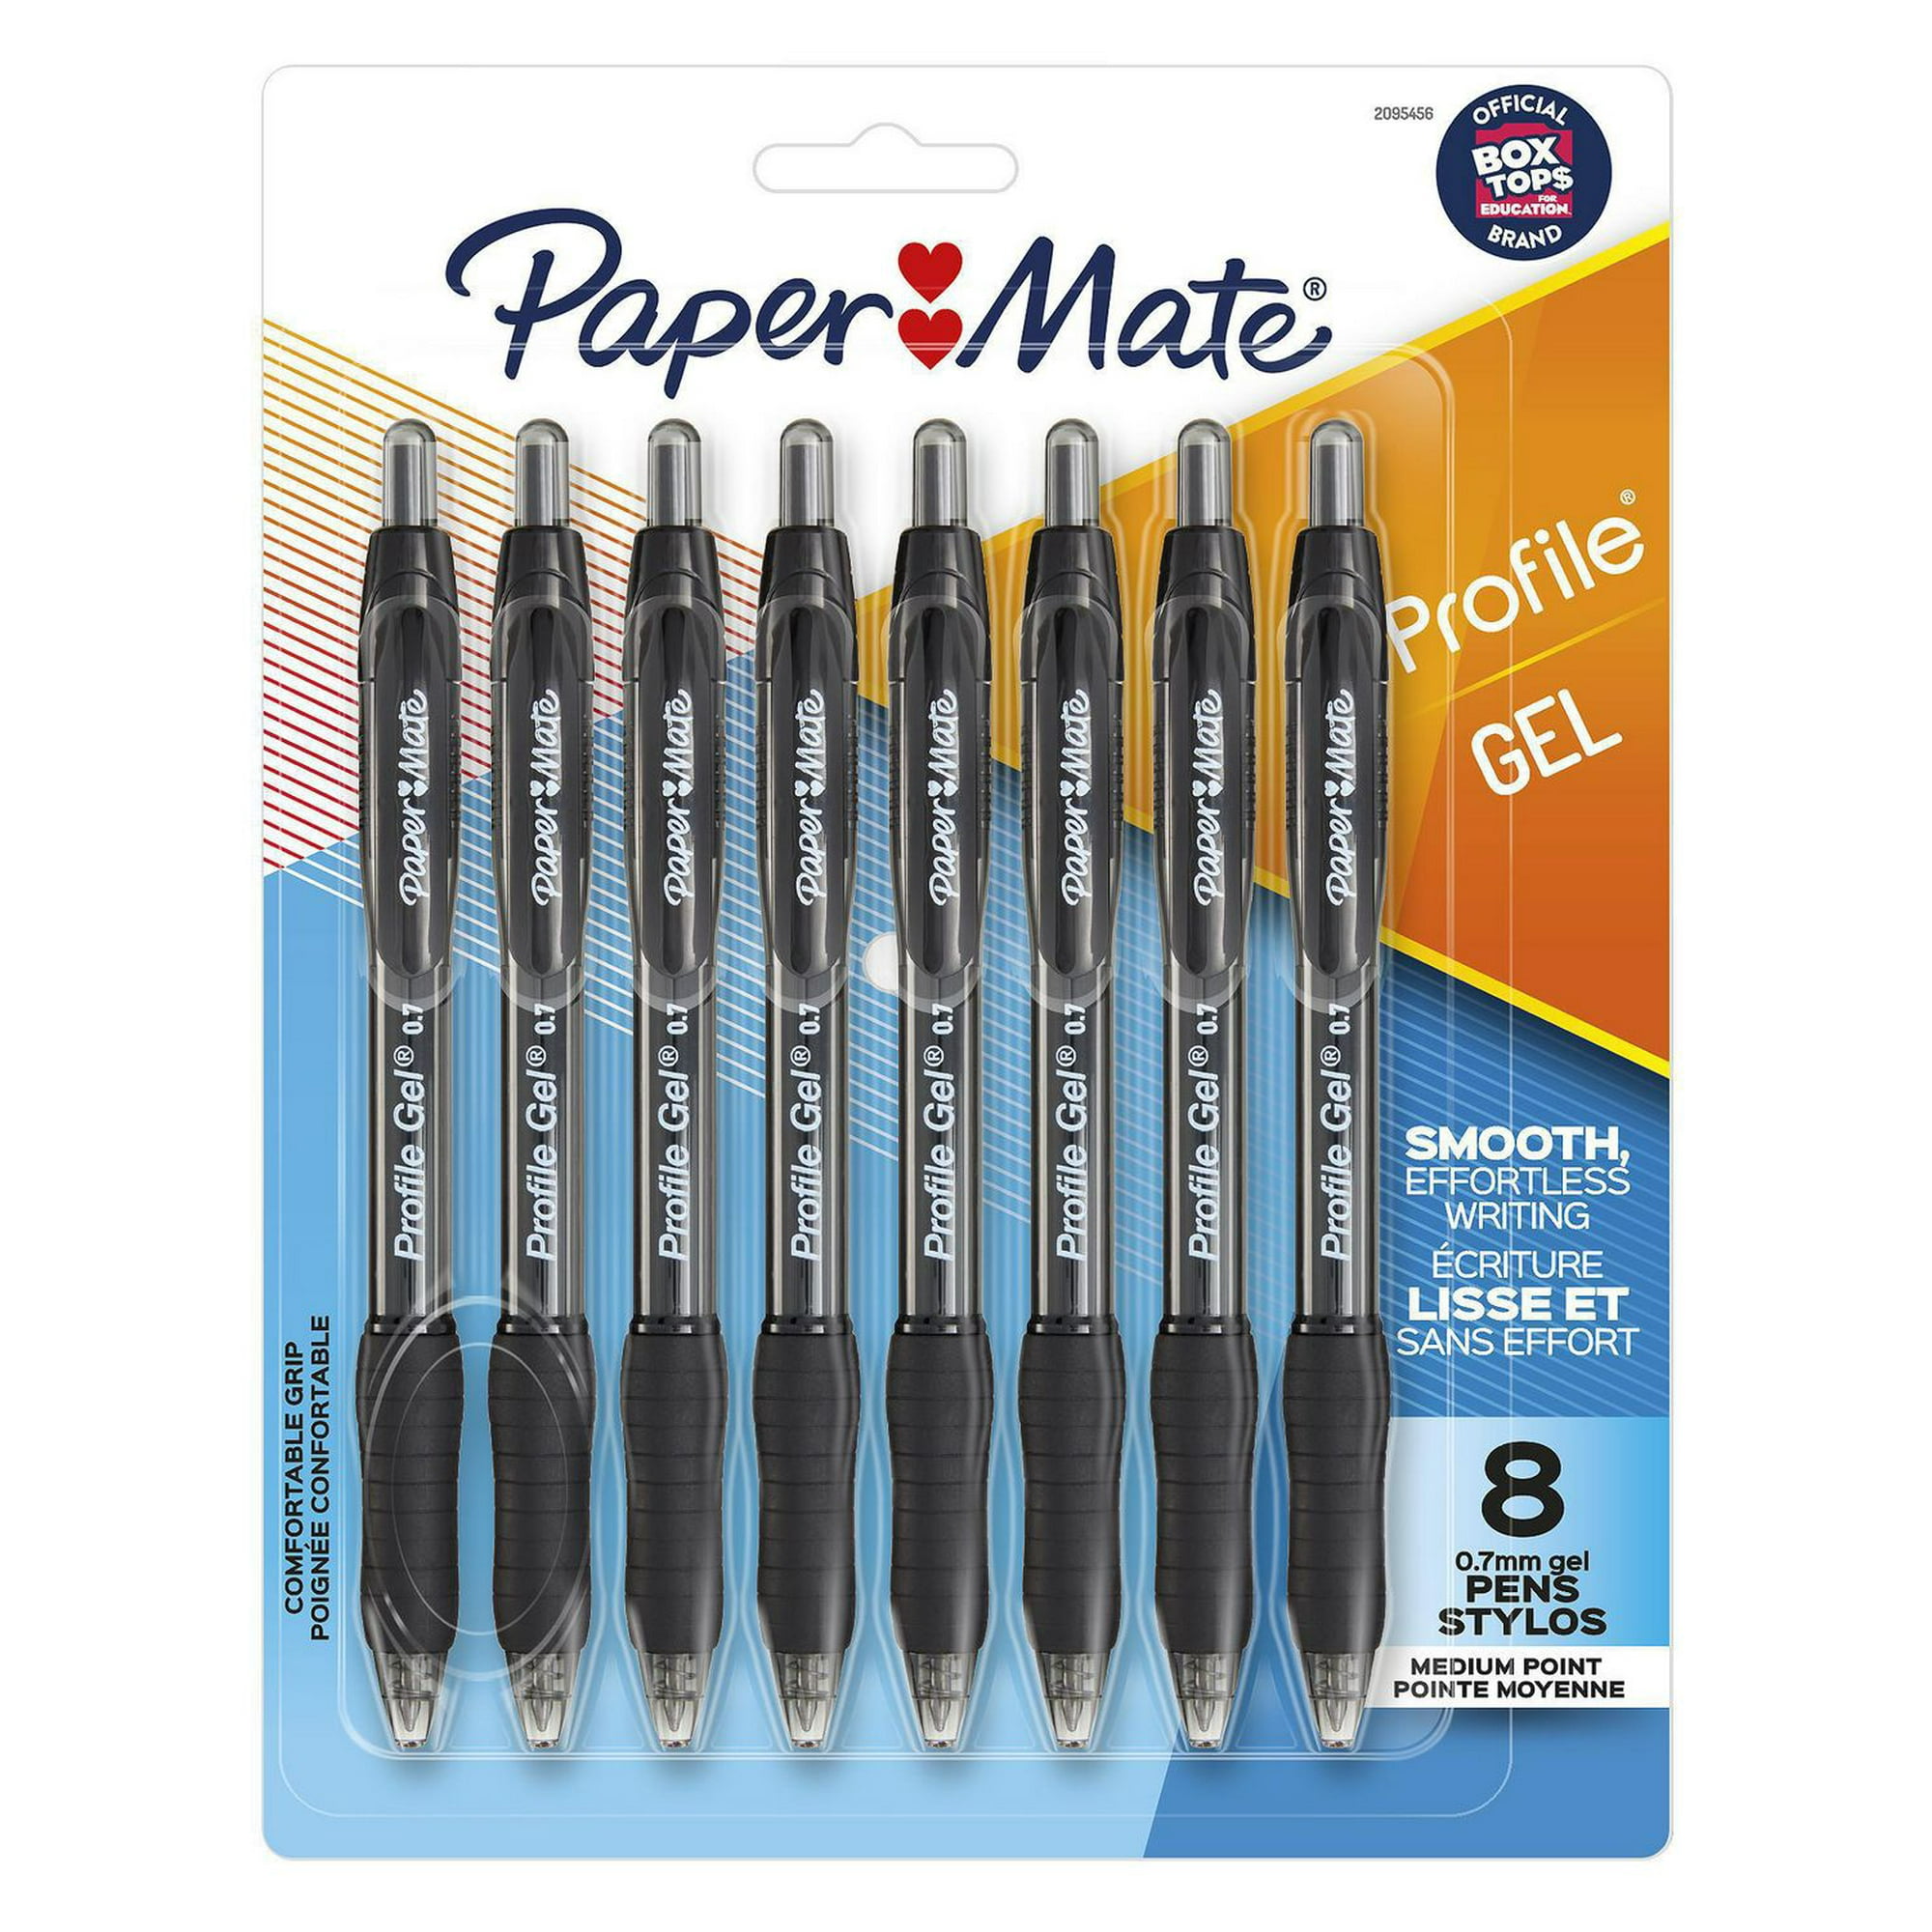 Paper Mate Gel Pen, Profile Retractable Pen, 0.7mm, Black, 8 Count, Gel  pens 